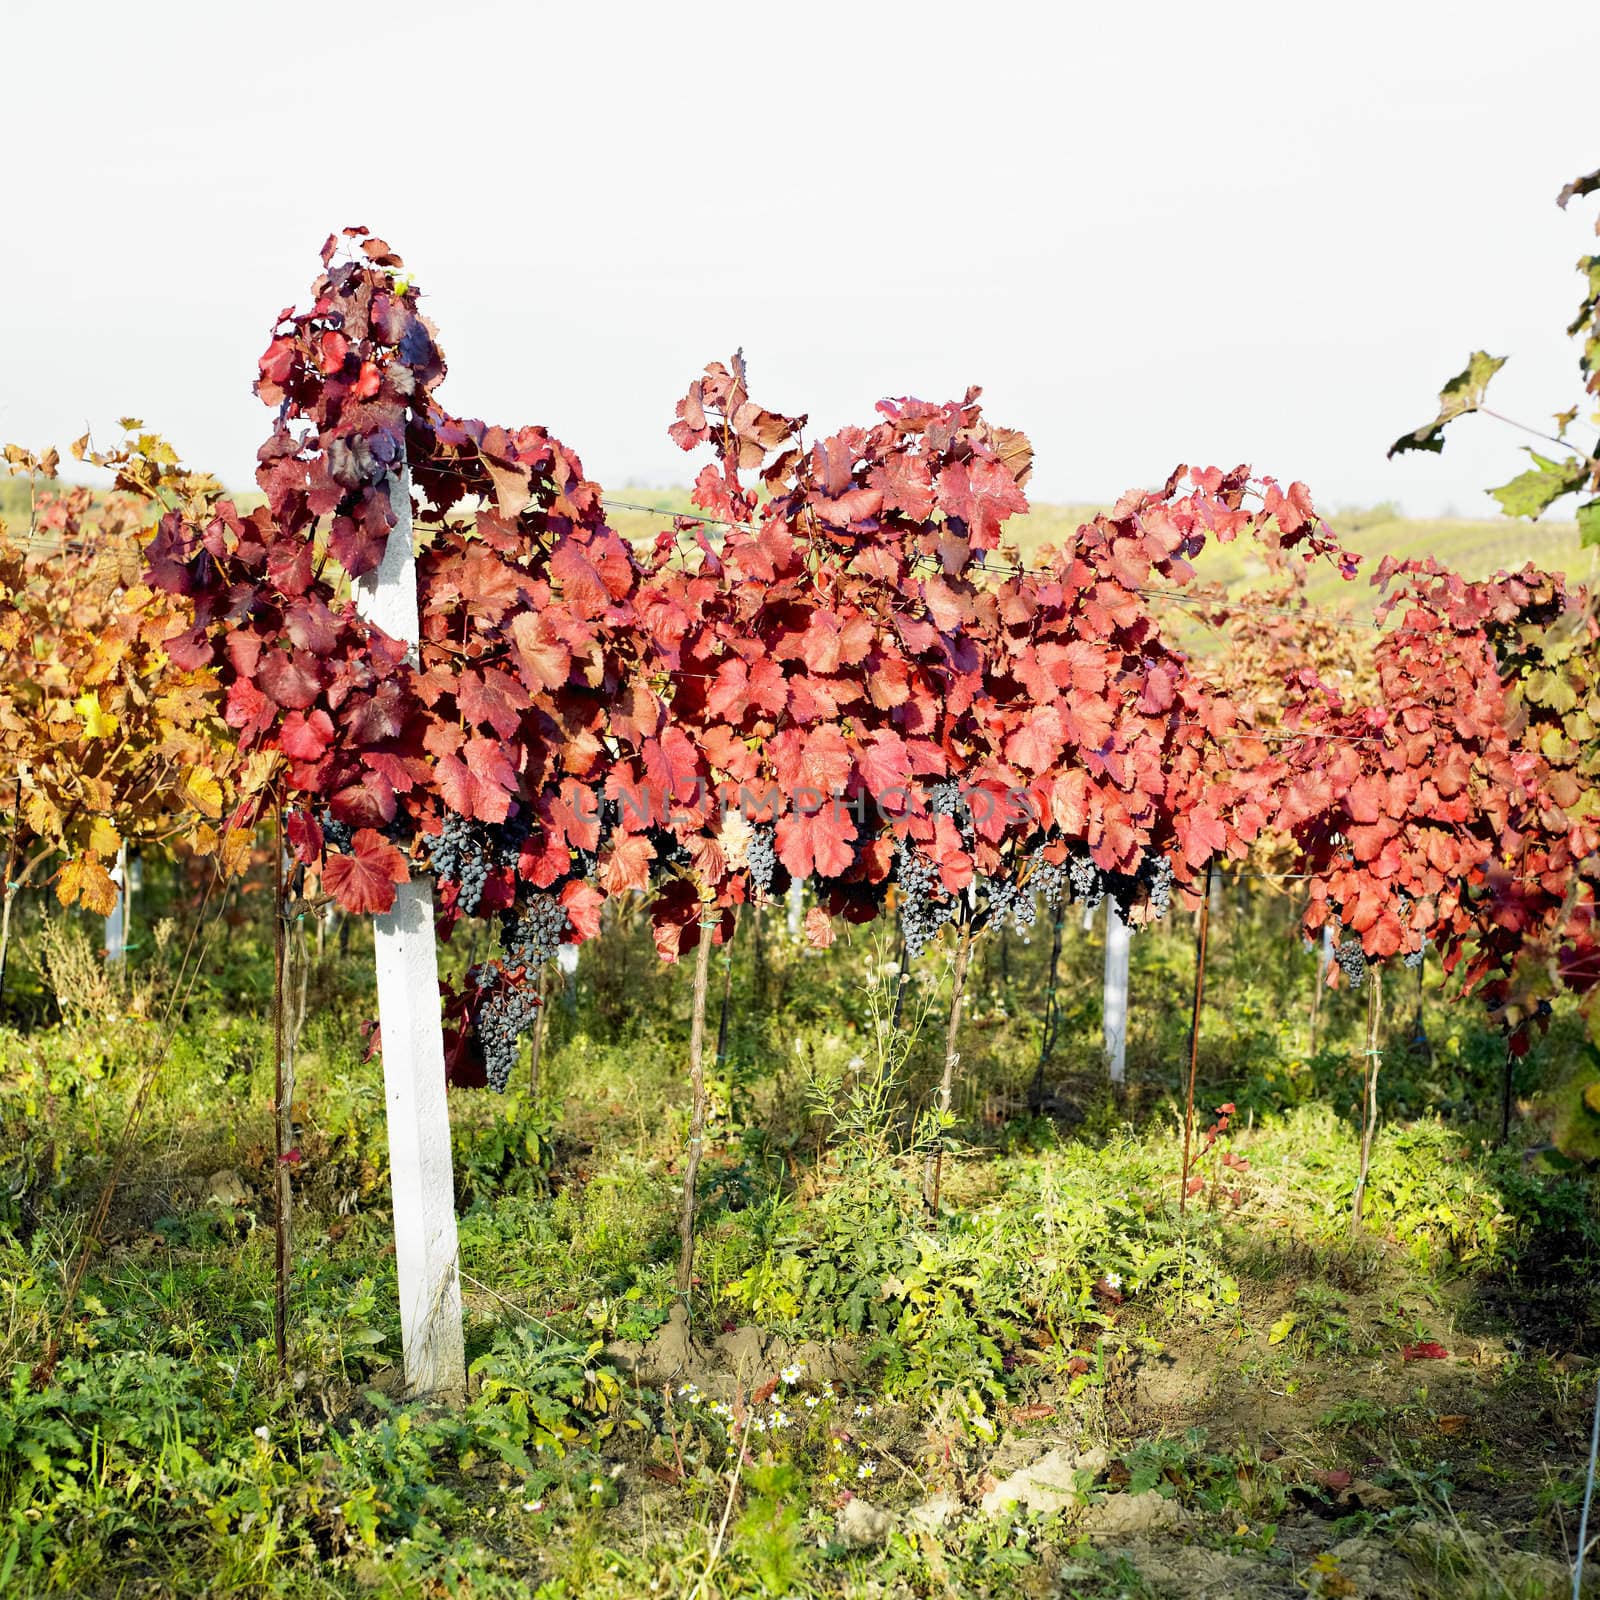 grapevines in vineyard, Czech Republic by phbcz